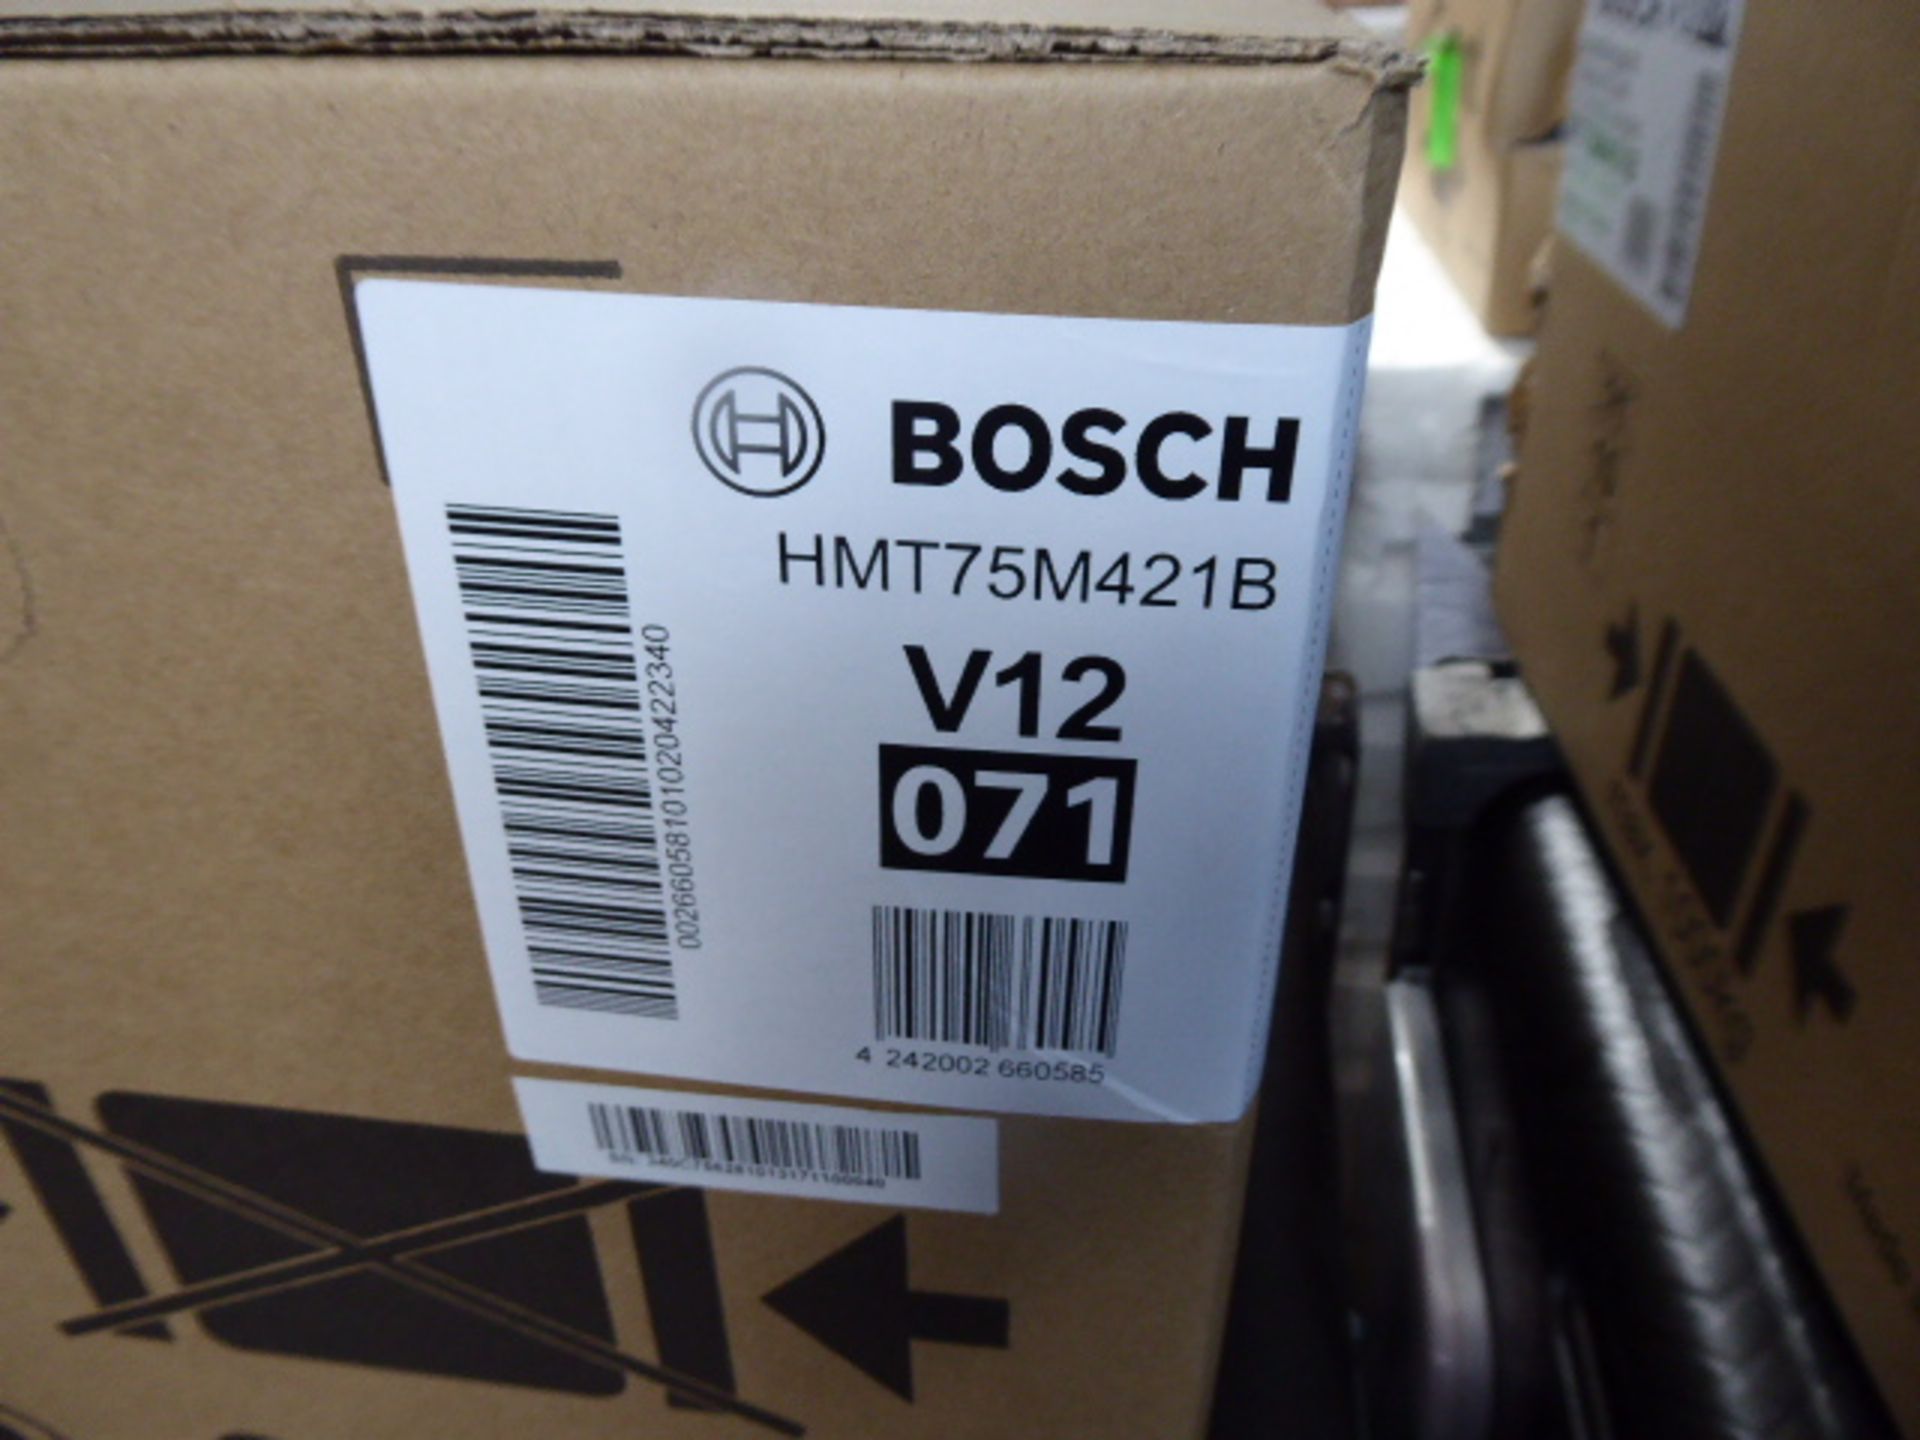 HMT75M421BB Bosch Microwave oven